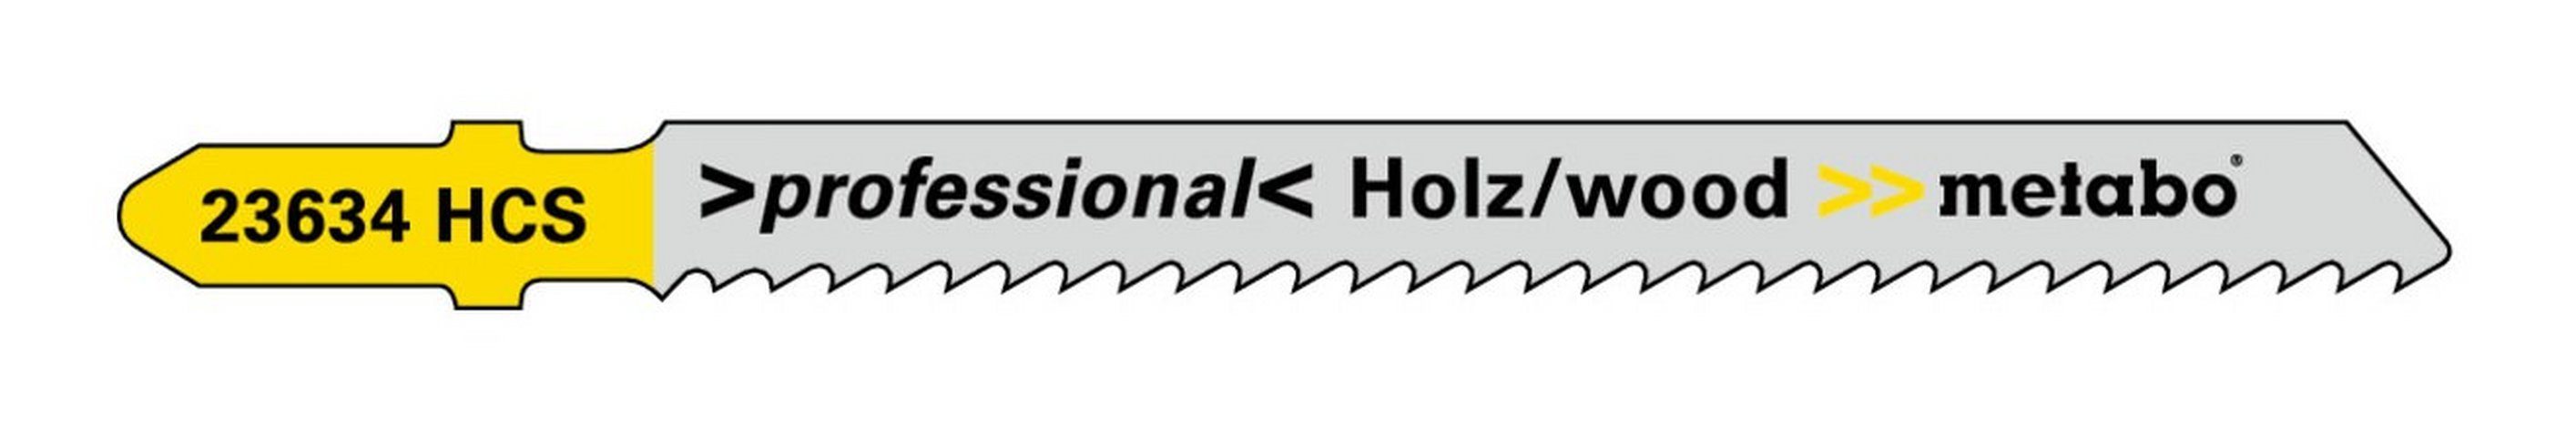 HCS professional 2,5 Serie Holz / metabo (25 mm 74 Stichsägeblatt Stück), Stichsägeblätter